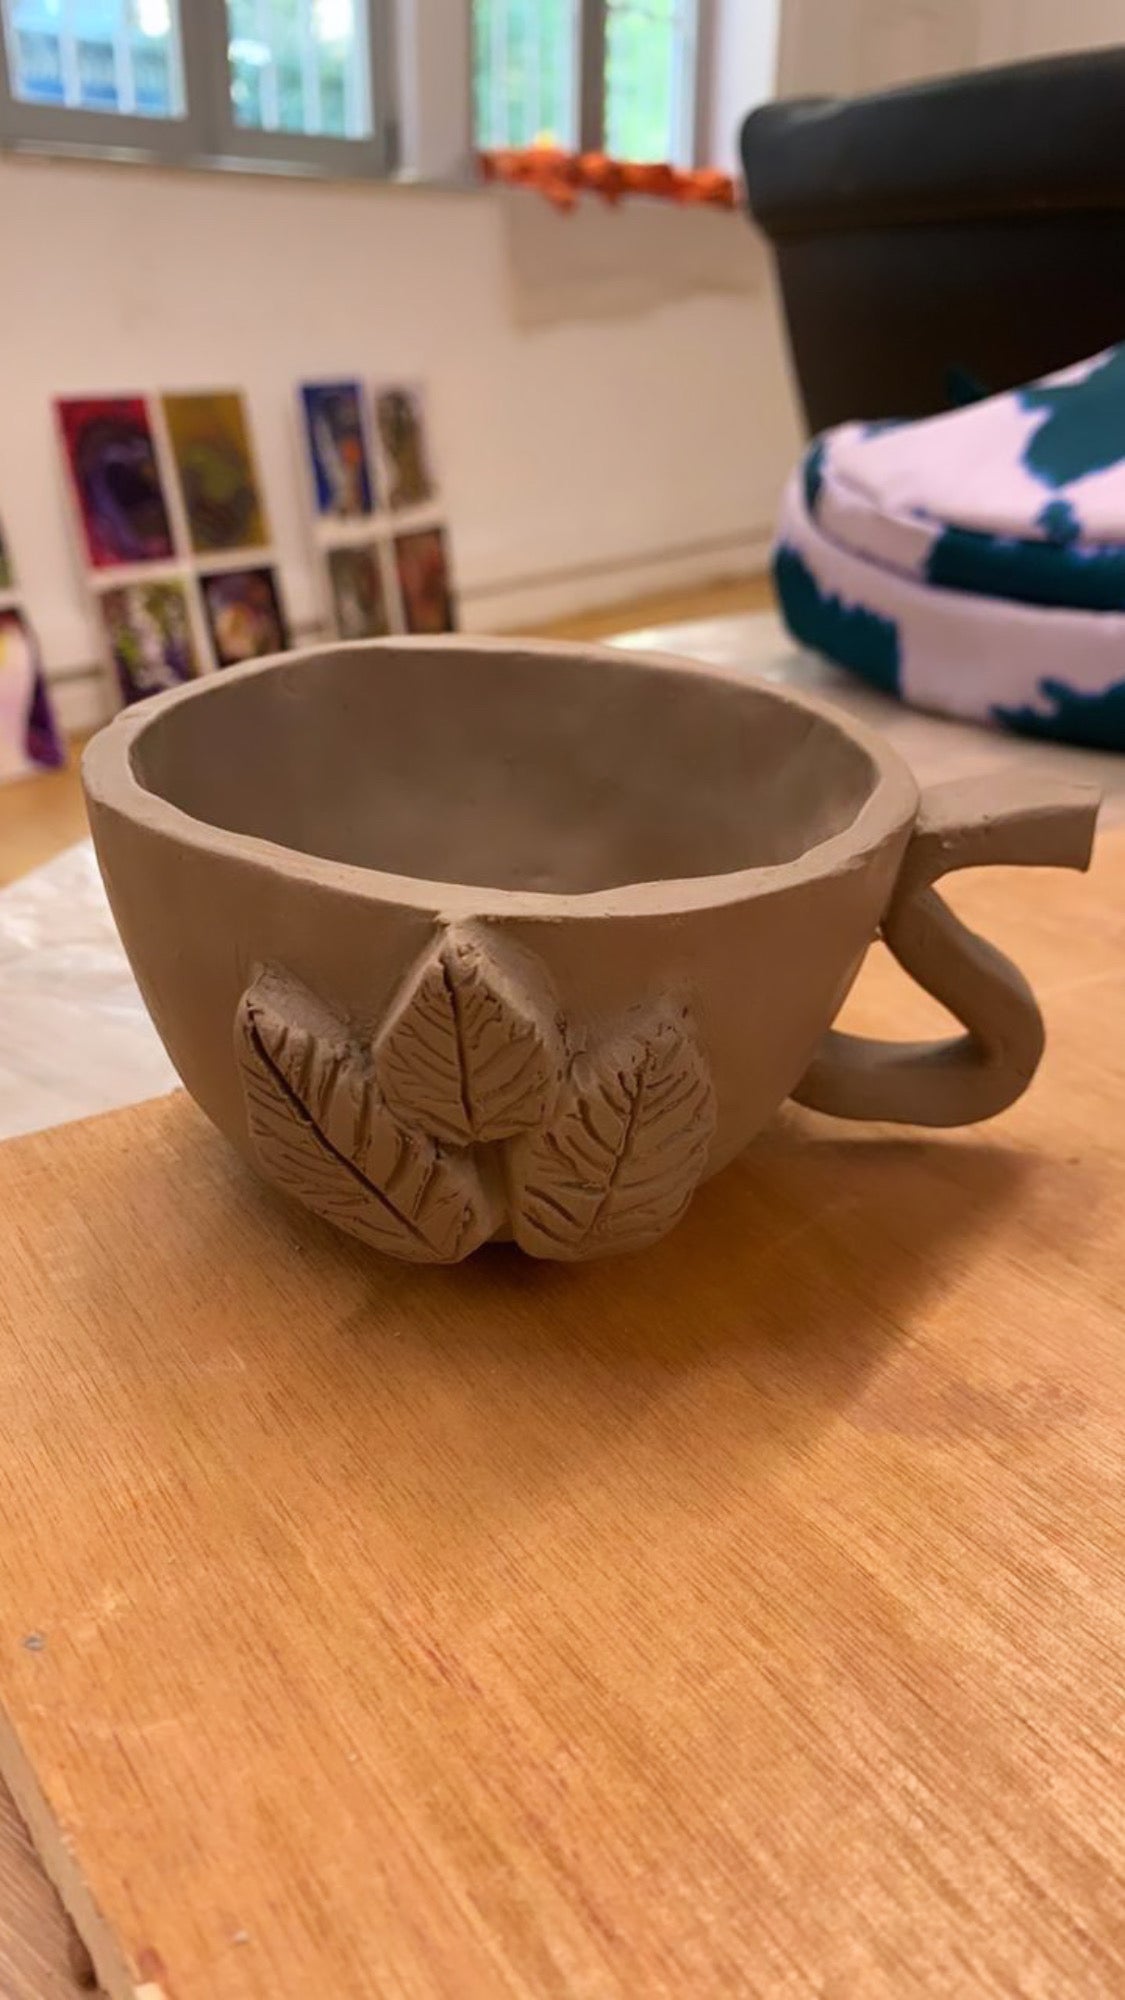 Clay Vase & Mug Making